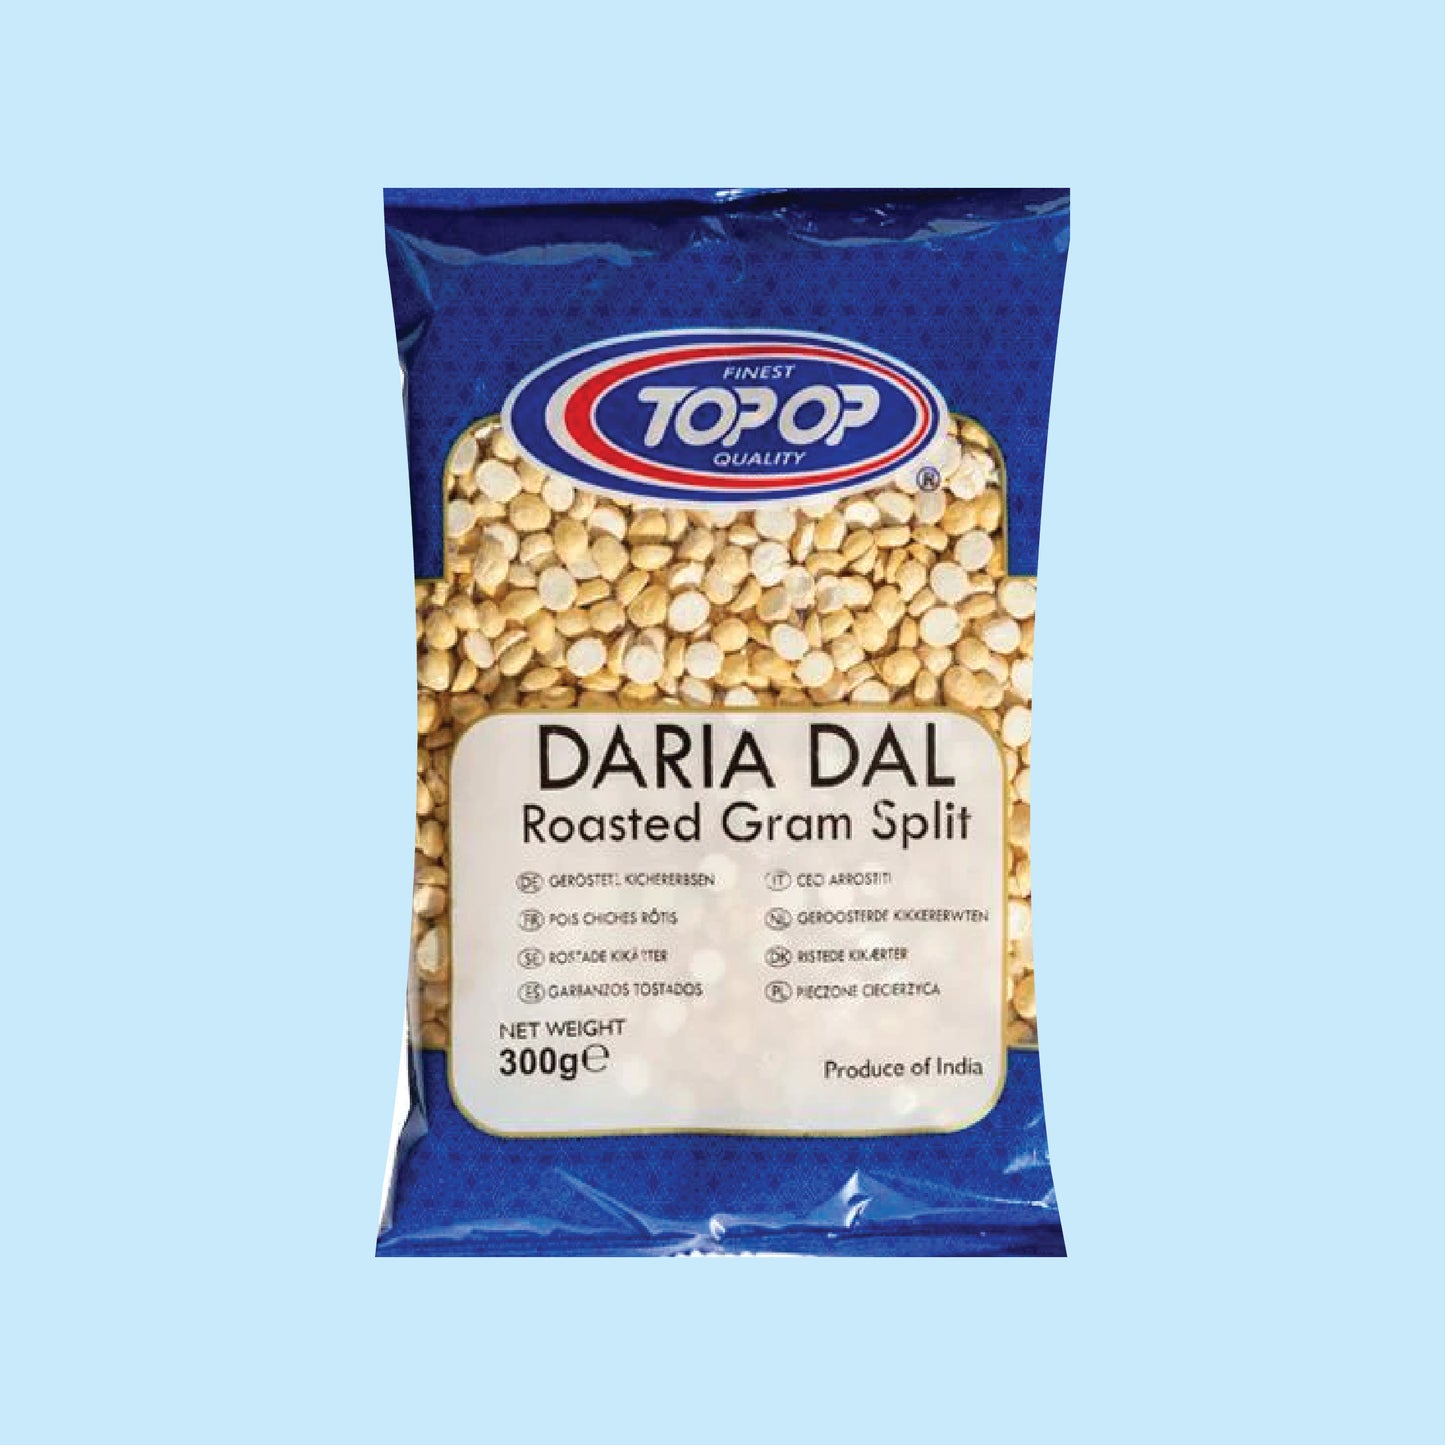 Top-Op Daria Dal (Roasted Gram Split)